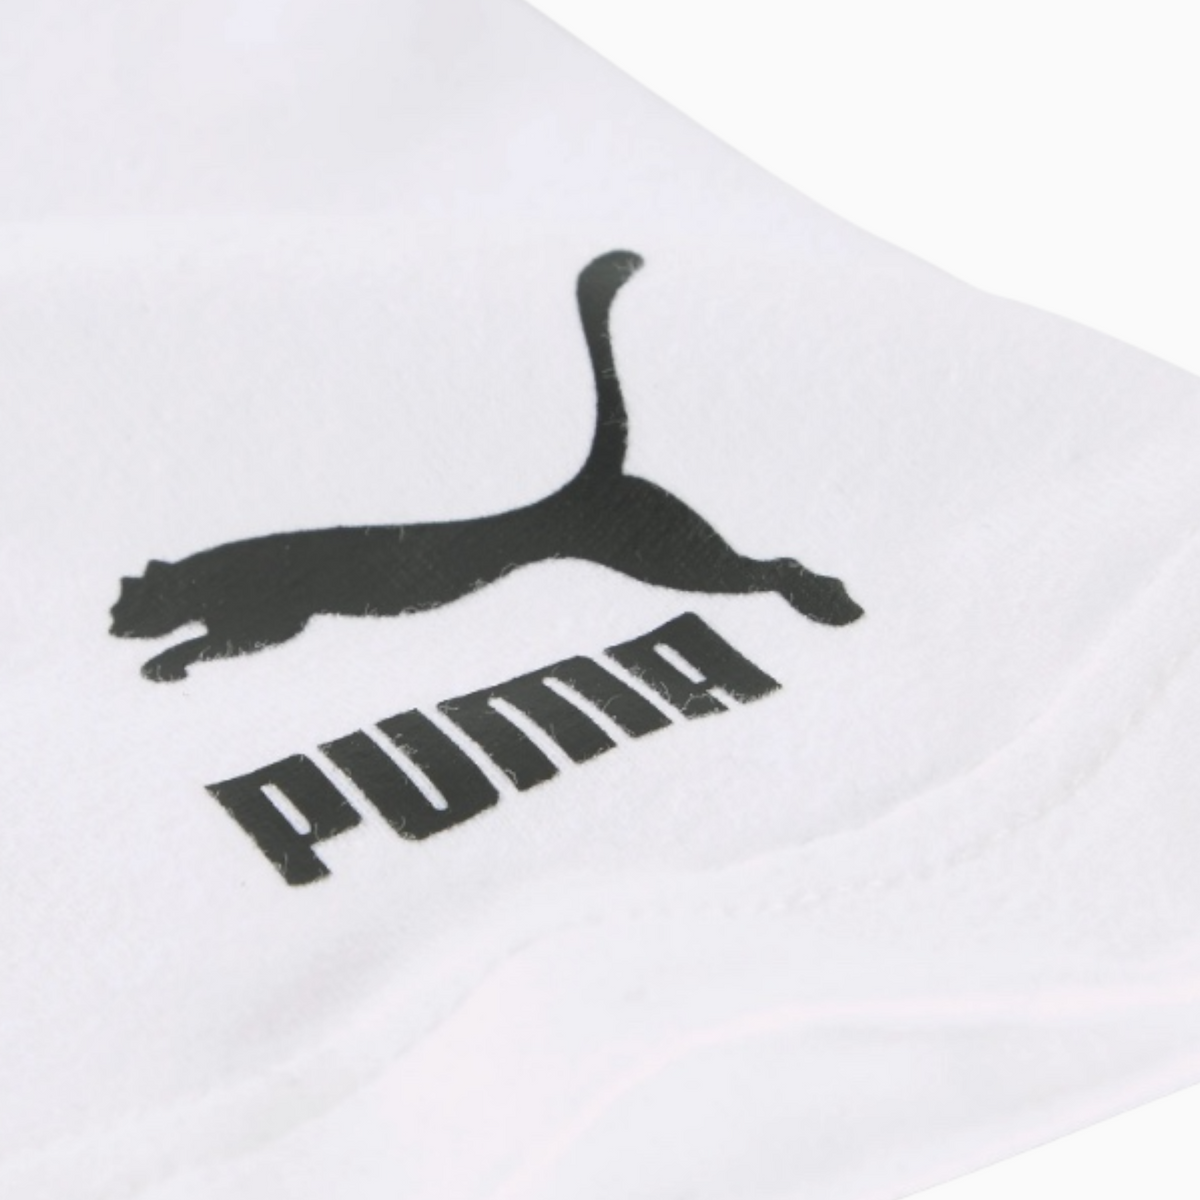 Puma Select Men's x Joshua Vides T-Shirt